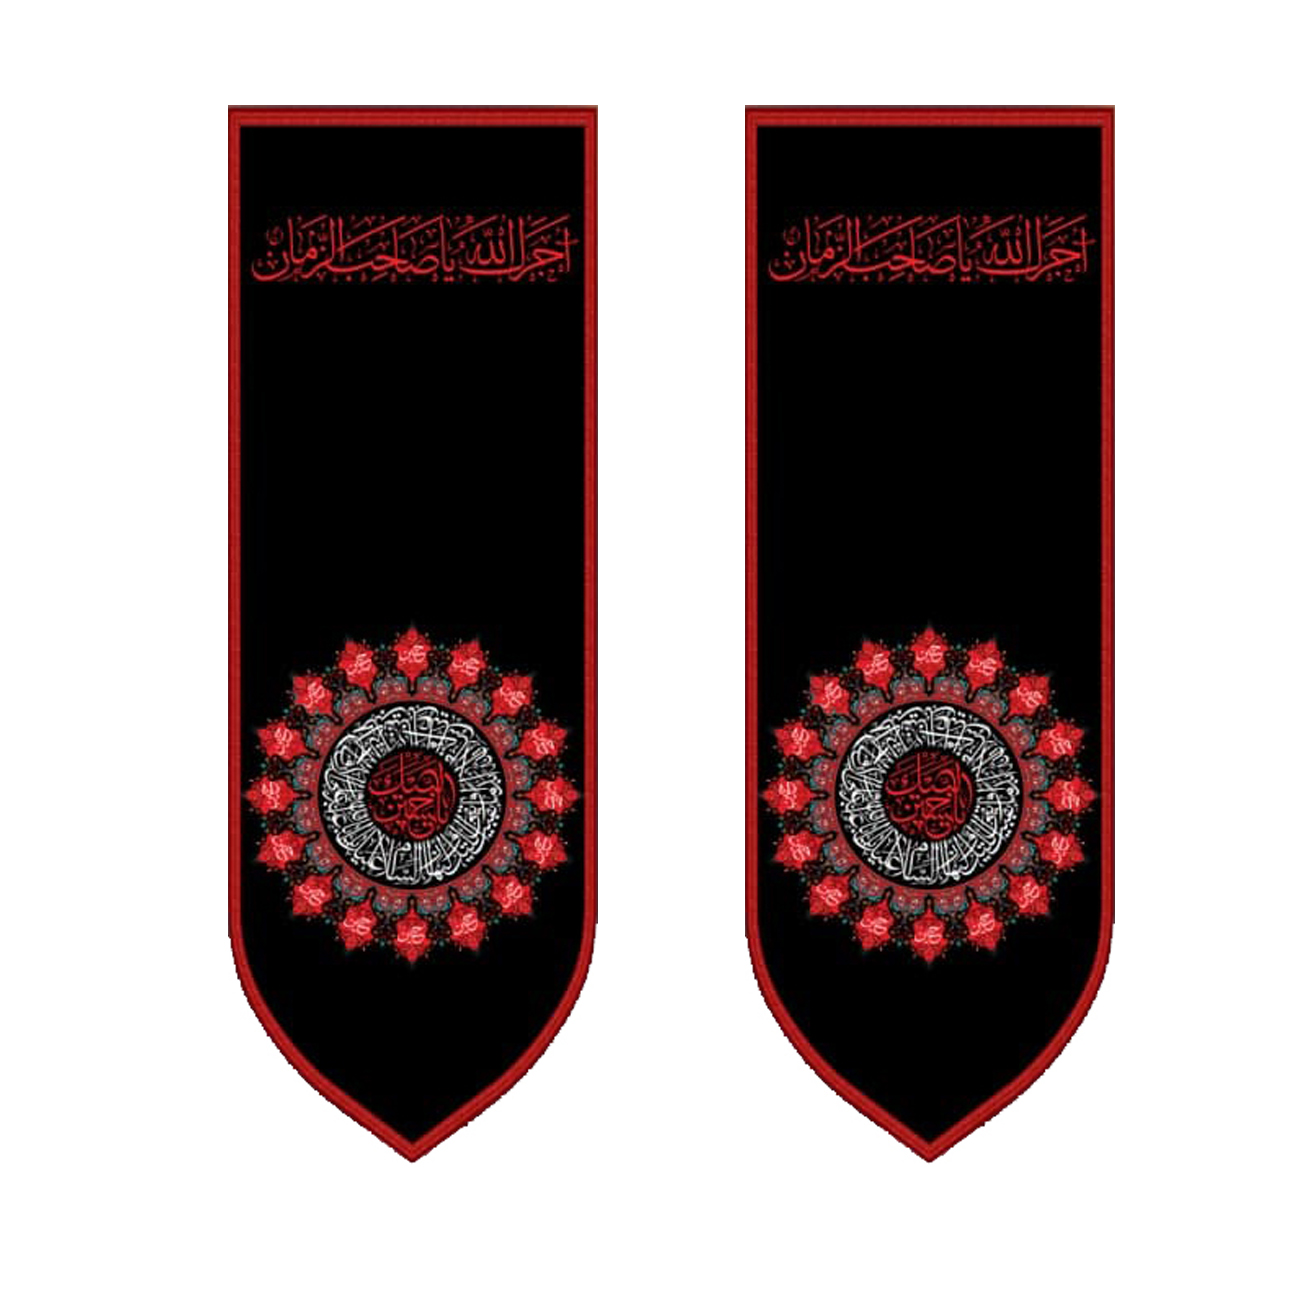 پرچم مدل آجرک الله یا صاحب الزمان کد 50001611-14050 بسته 2 عددی